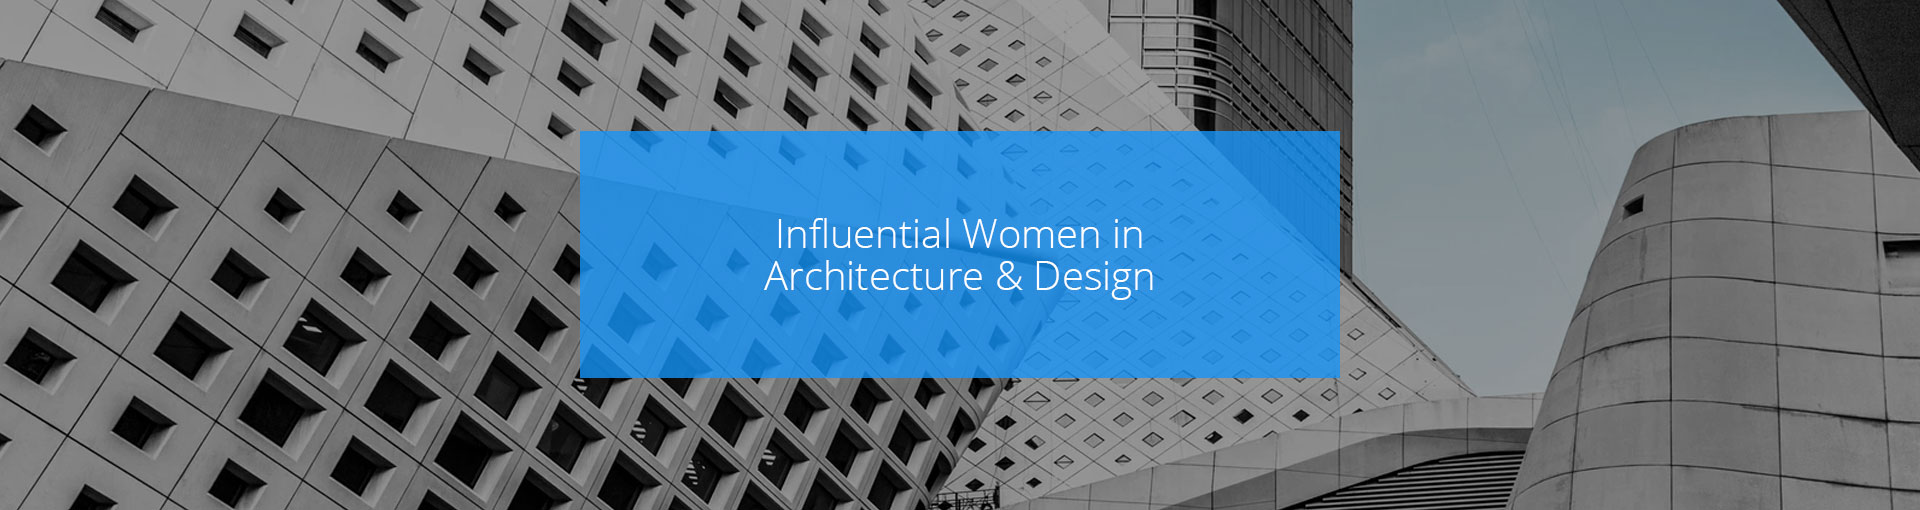 Influential Women in Architecture & Design Featured Image